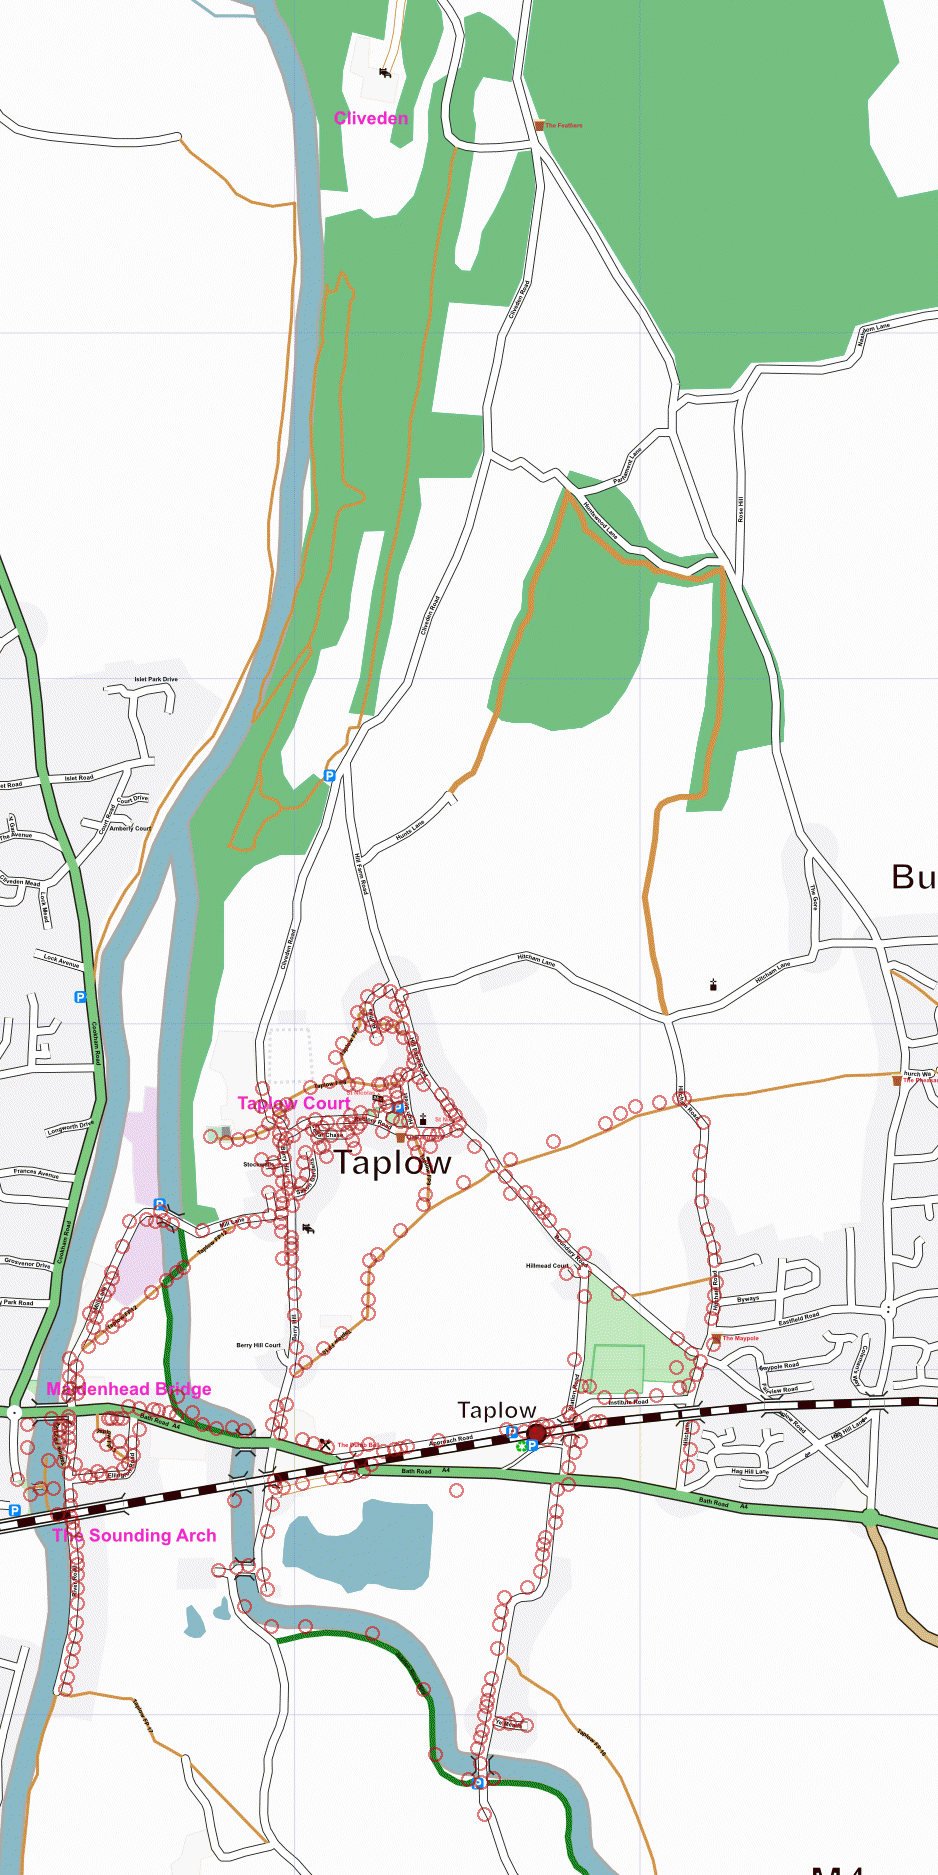 Map of Taplow area